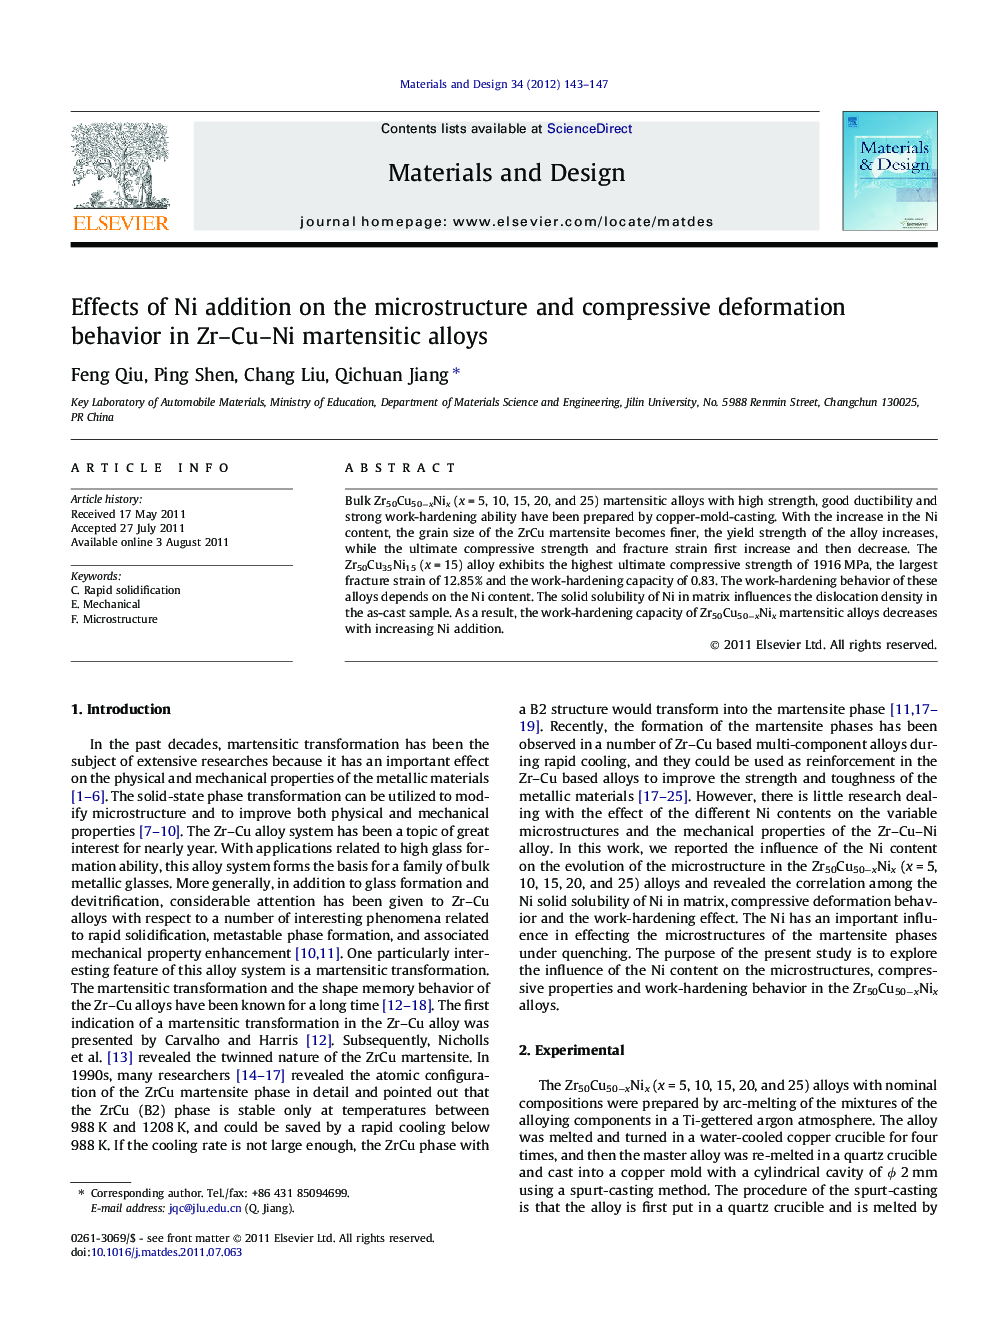 Effects of Ni addition on the microstructure and compressive deformation behavior in Zr–Cu–Ni martensitic alloys